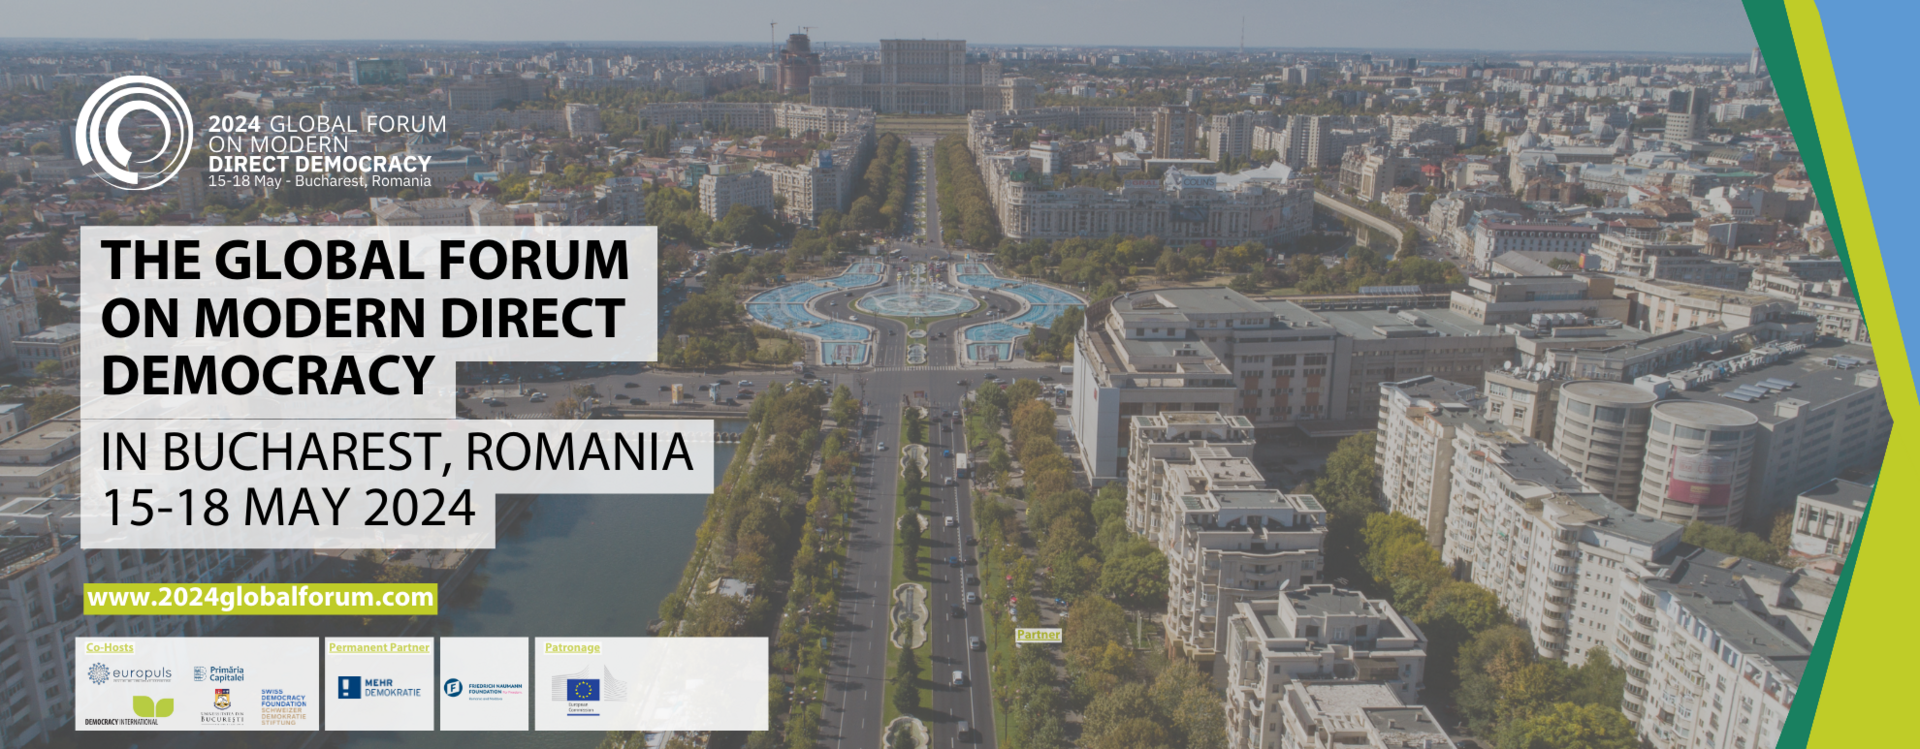 Highlights of 2024 Global Forum on Modern Direct Democracy, Bucharest